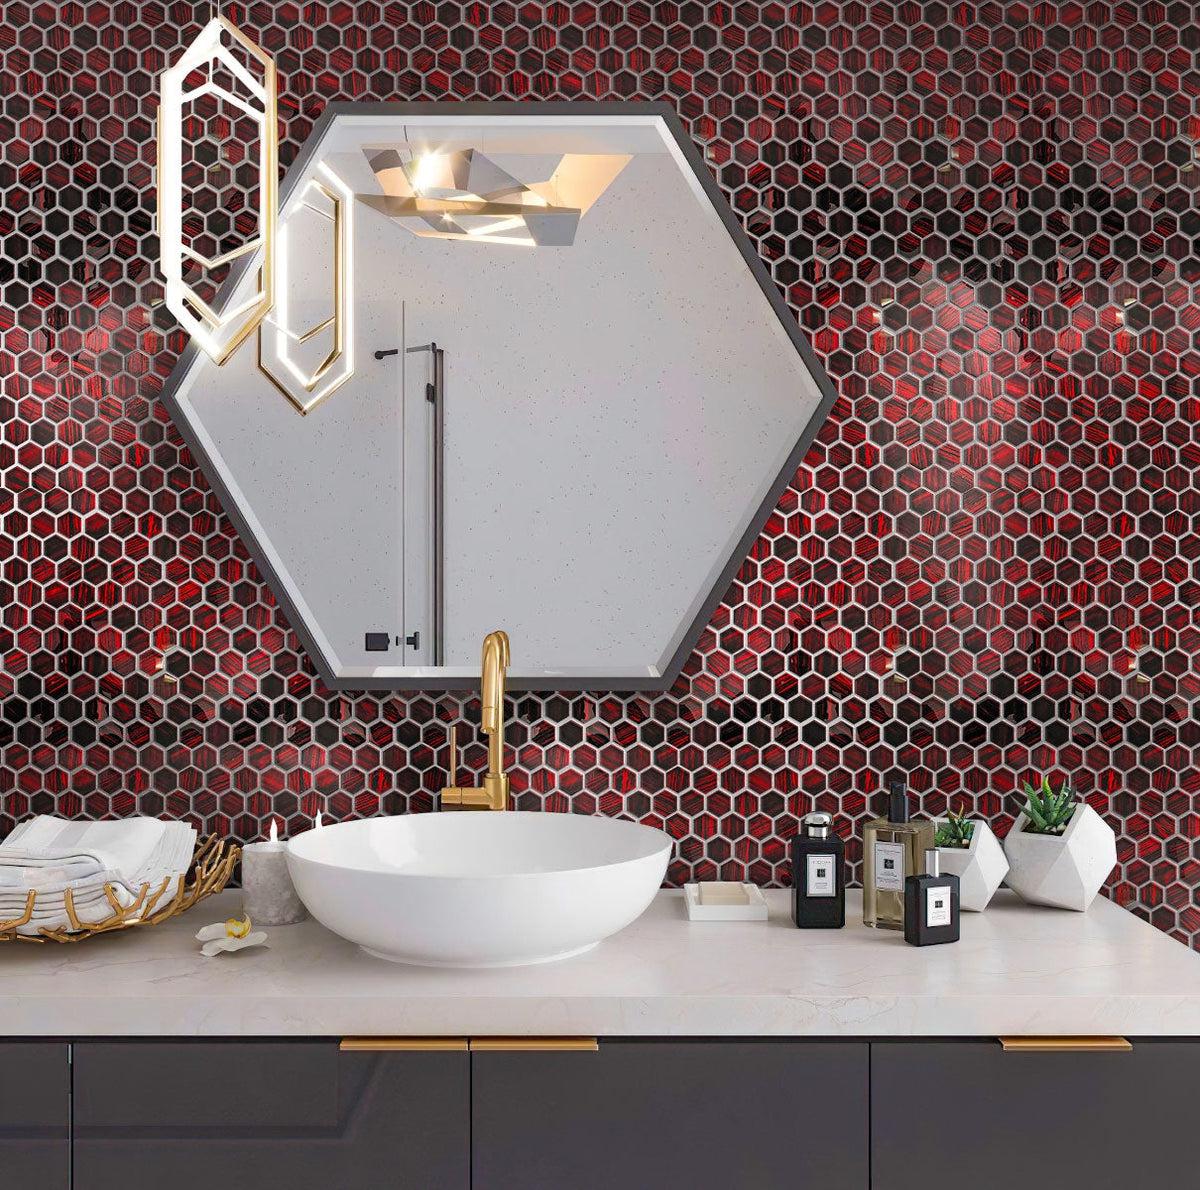 Red glass hexagon tile bathroom sink backsplash wall